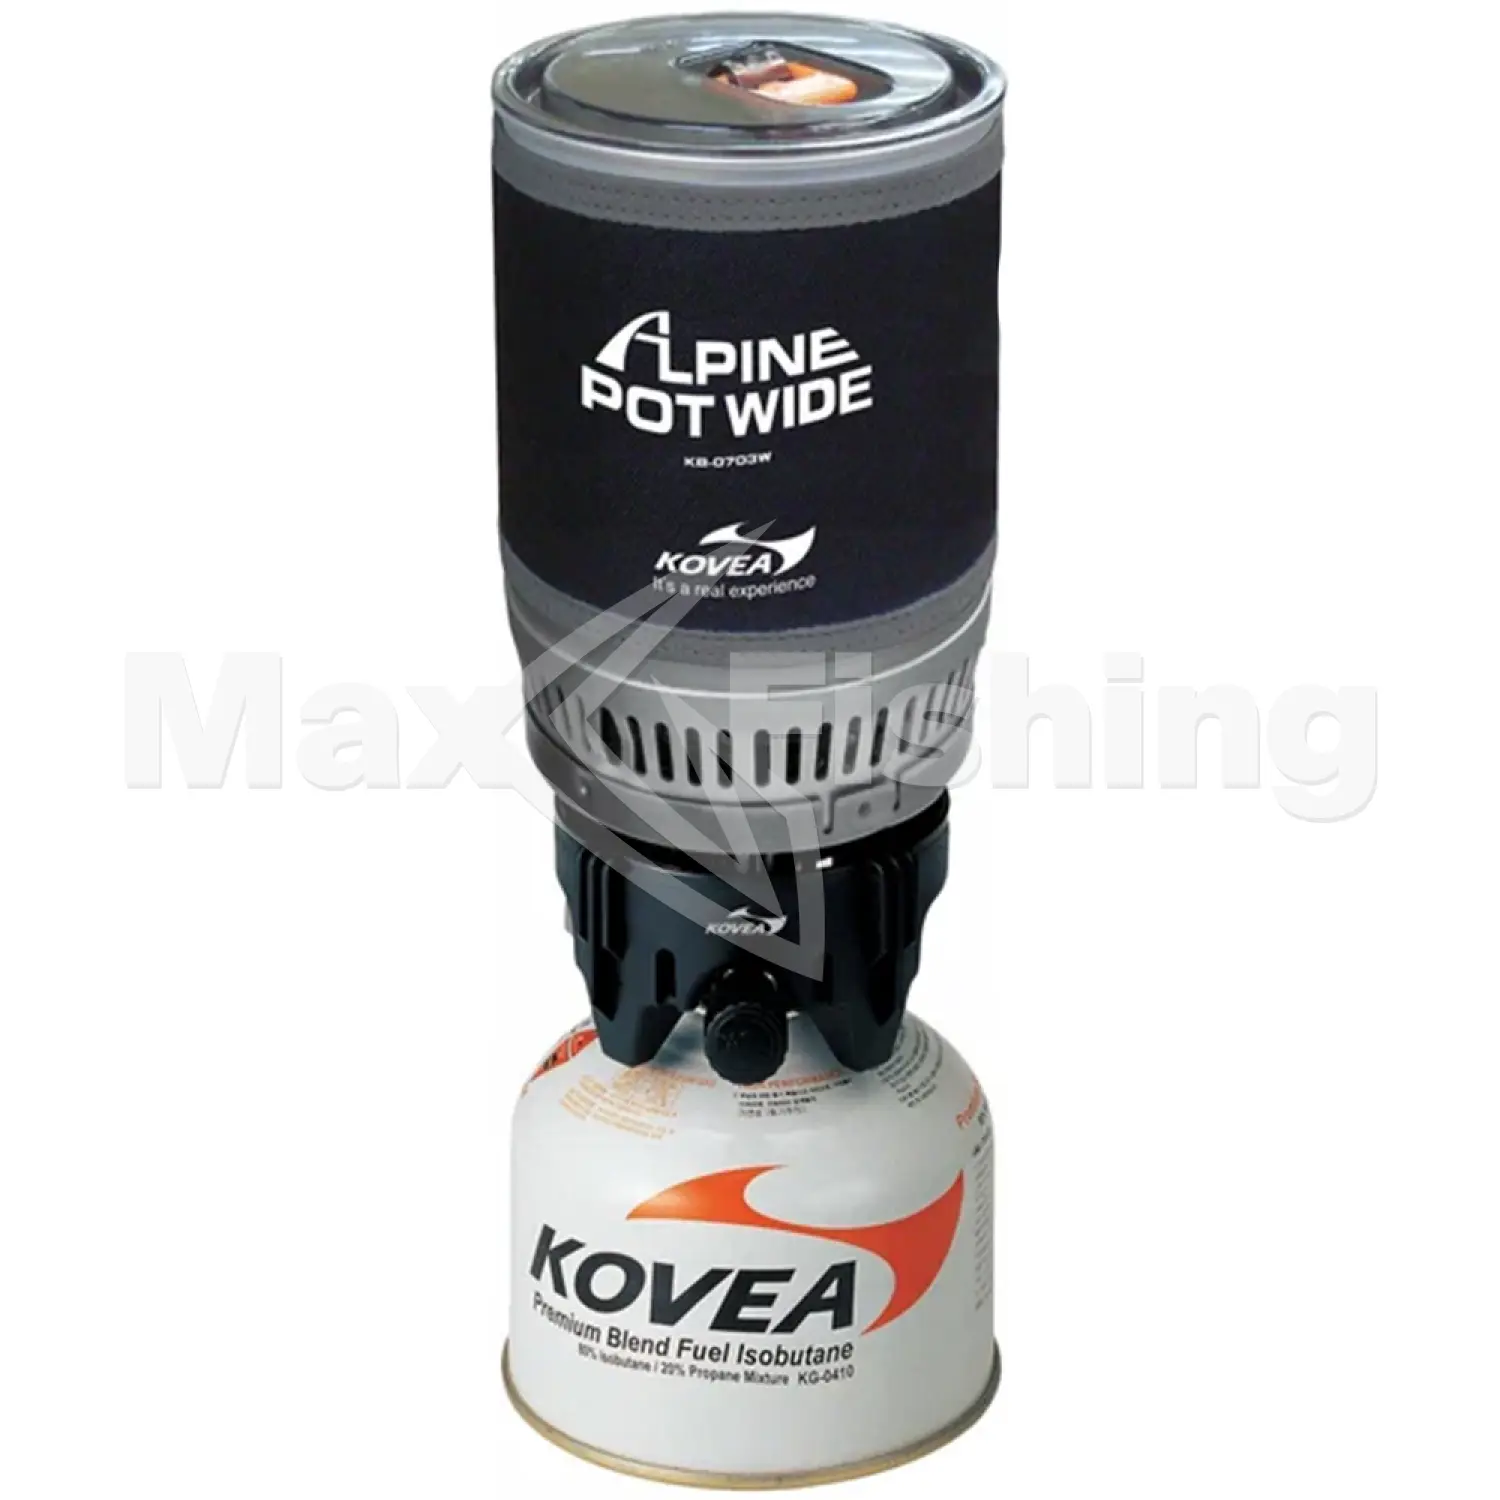 Система приготовления пищи Kovea Alpine Pot Wide KB-0703W Alpine Pot WIDE